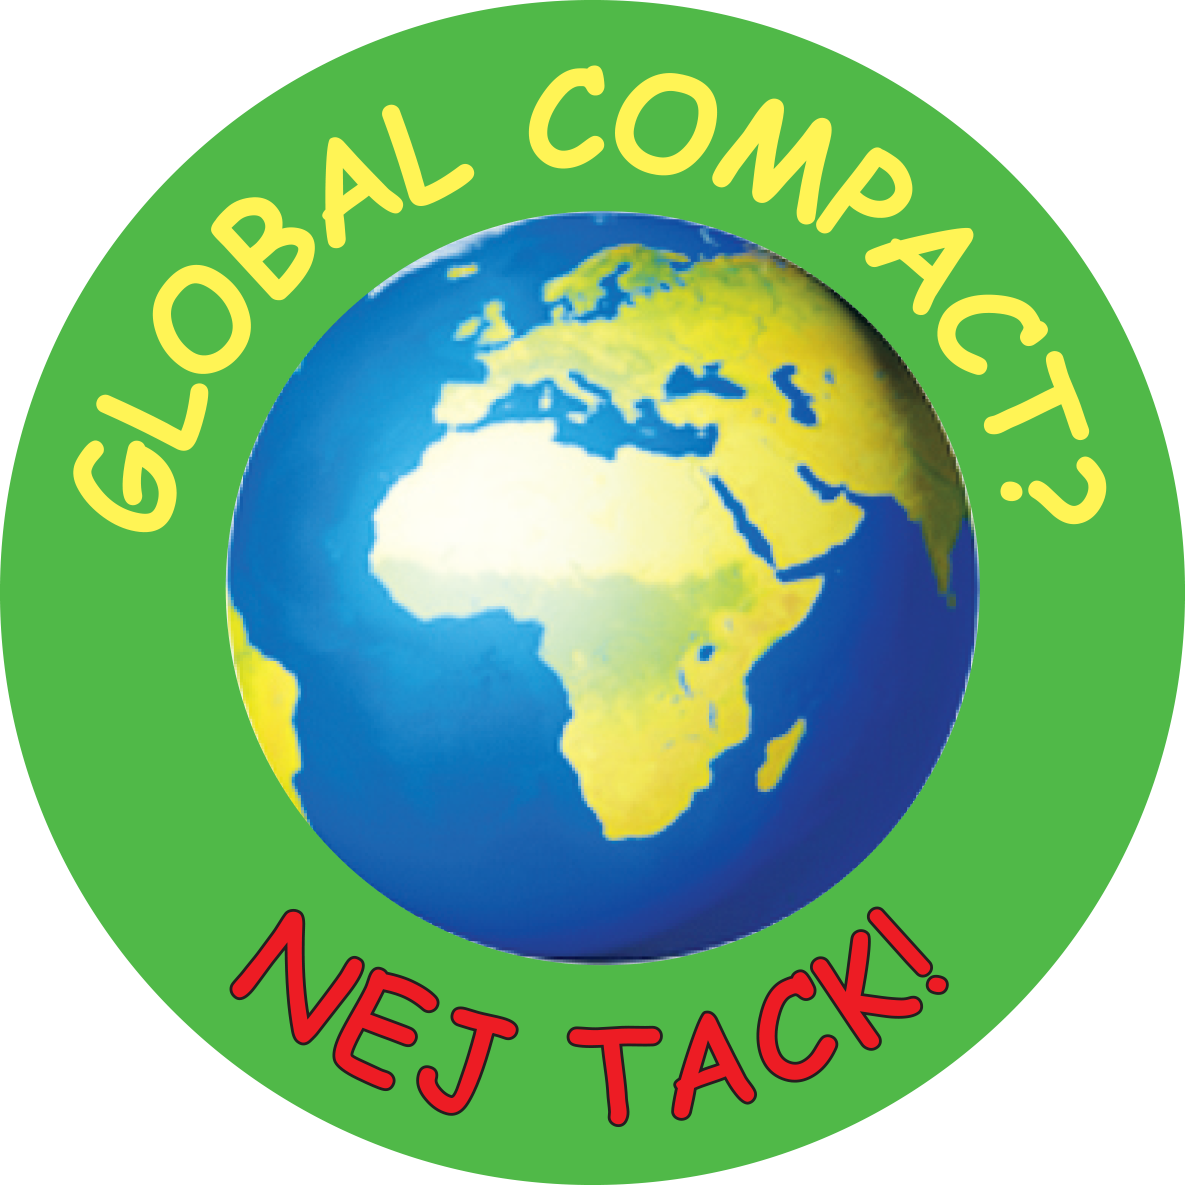 Global Compact Nej tack